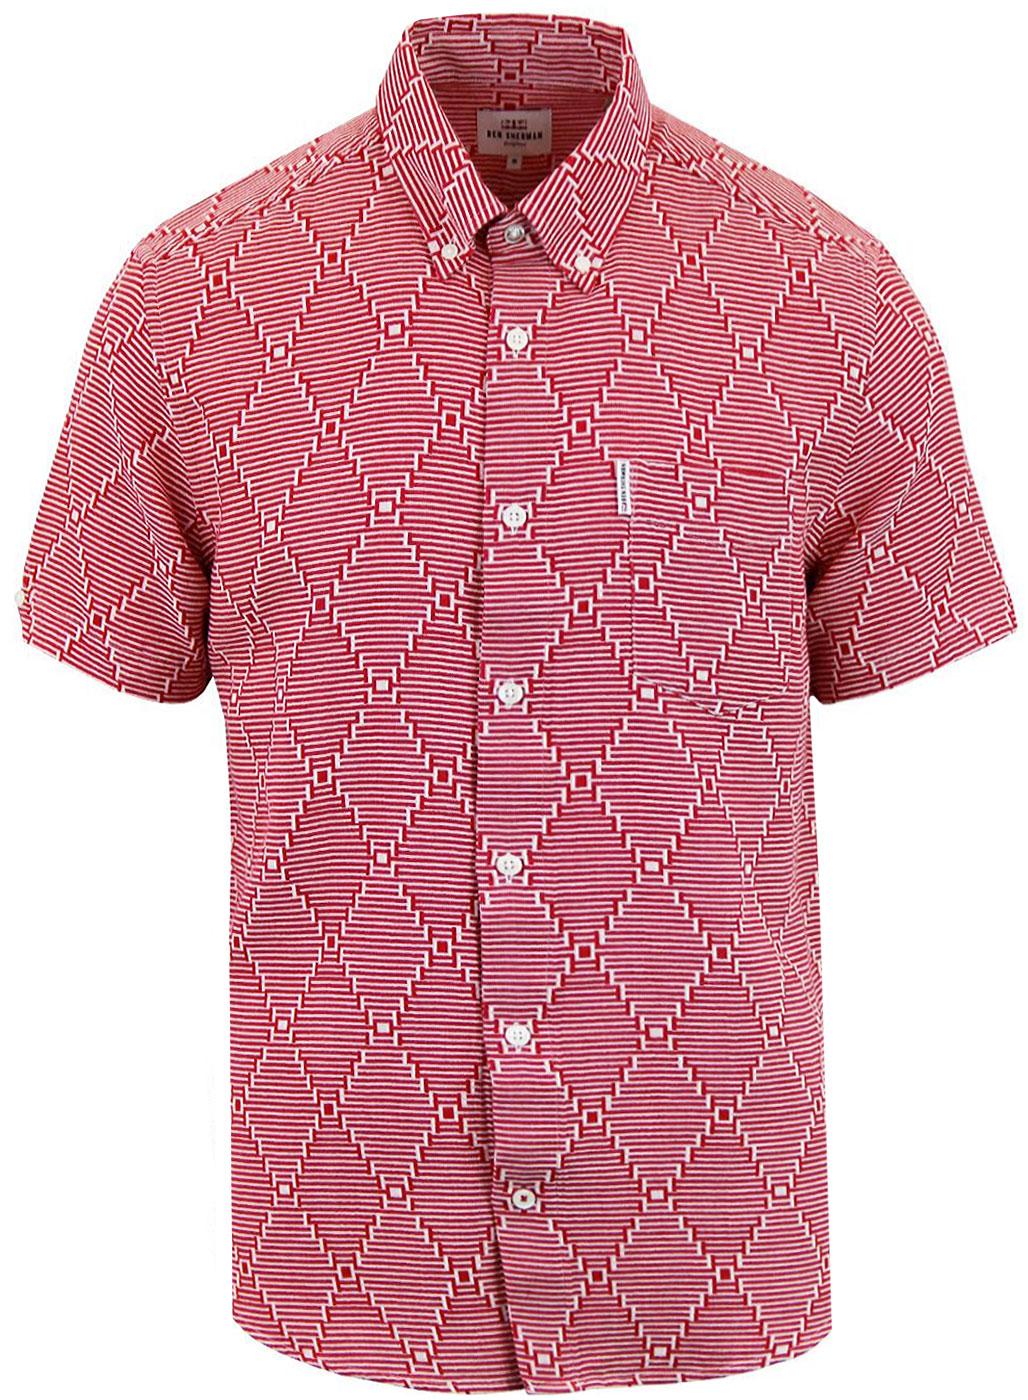 BEN SHERMAN 60s Mod Warped Stripe Op Art Shirt RED